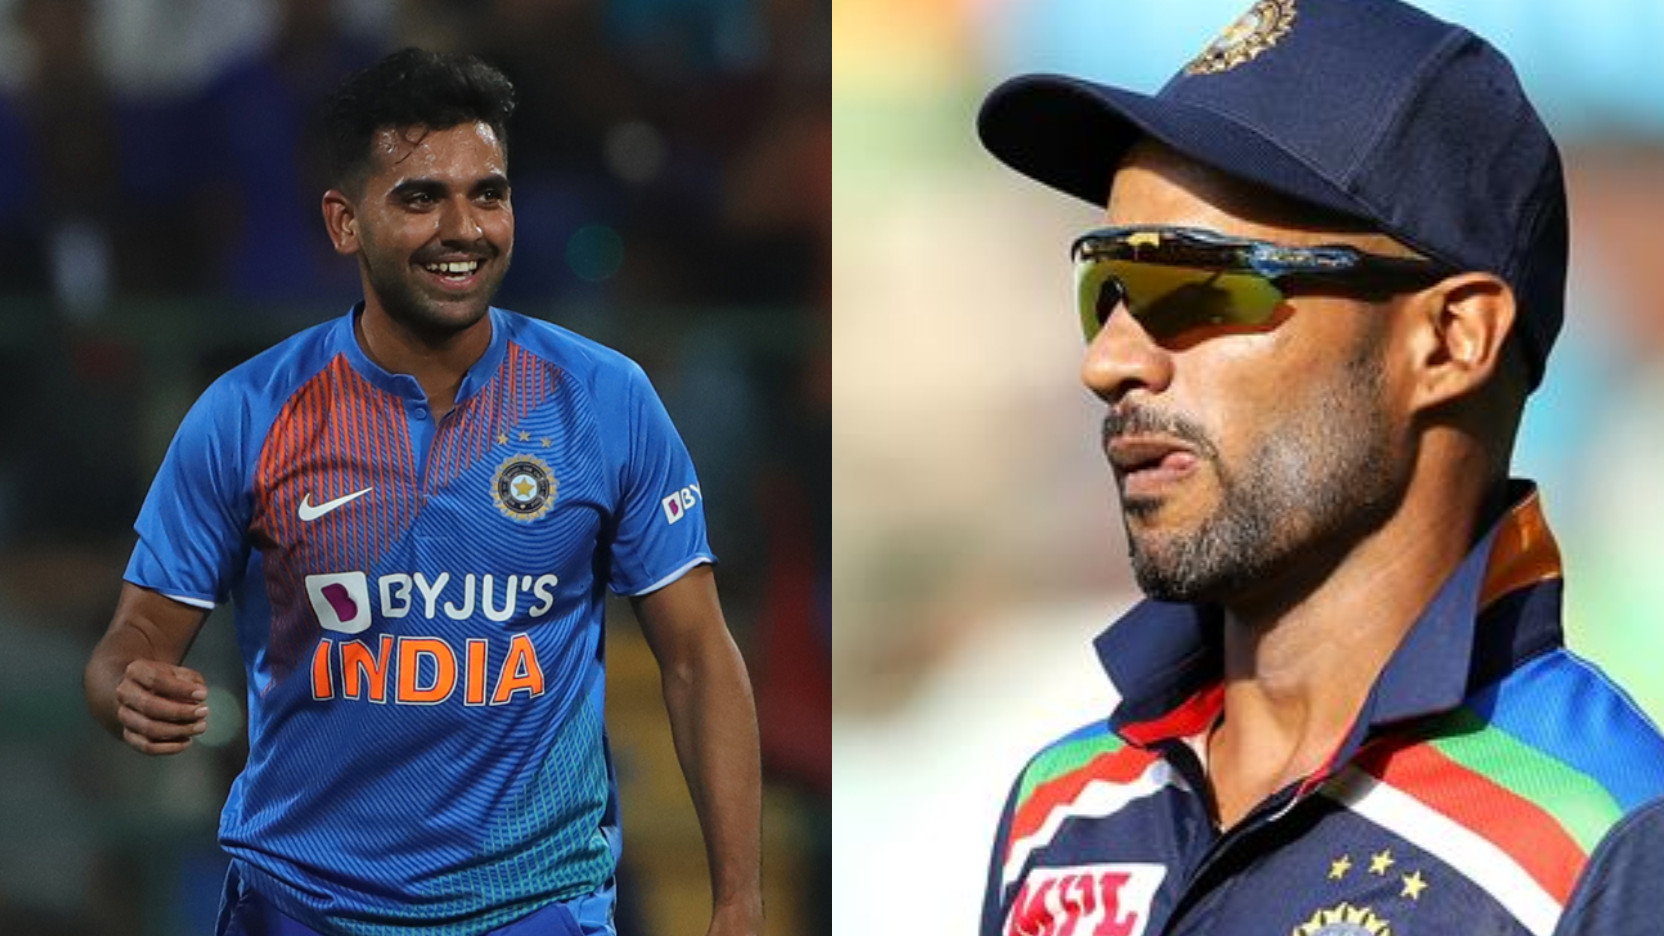 Shikhar Dhawan will be a good choice to captain India on Sri Lanka tour, says Deepak Chahar